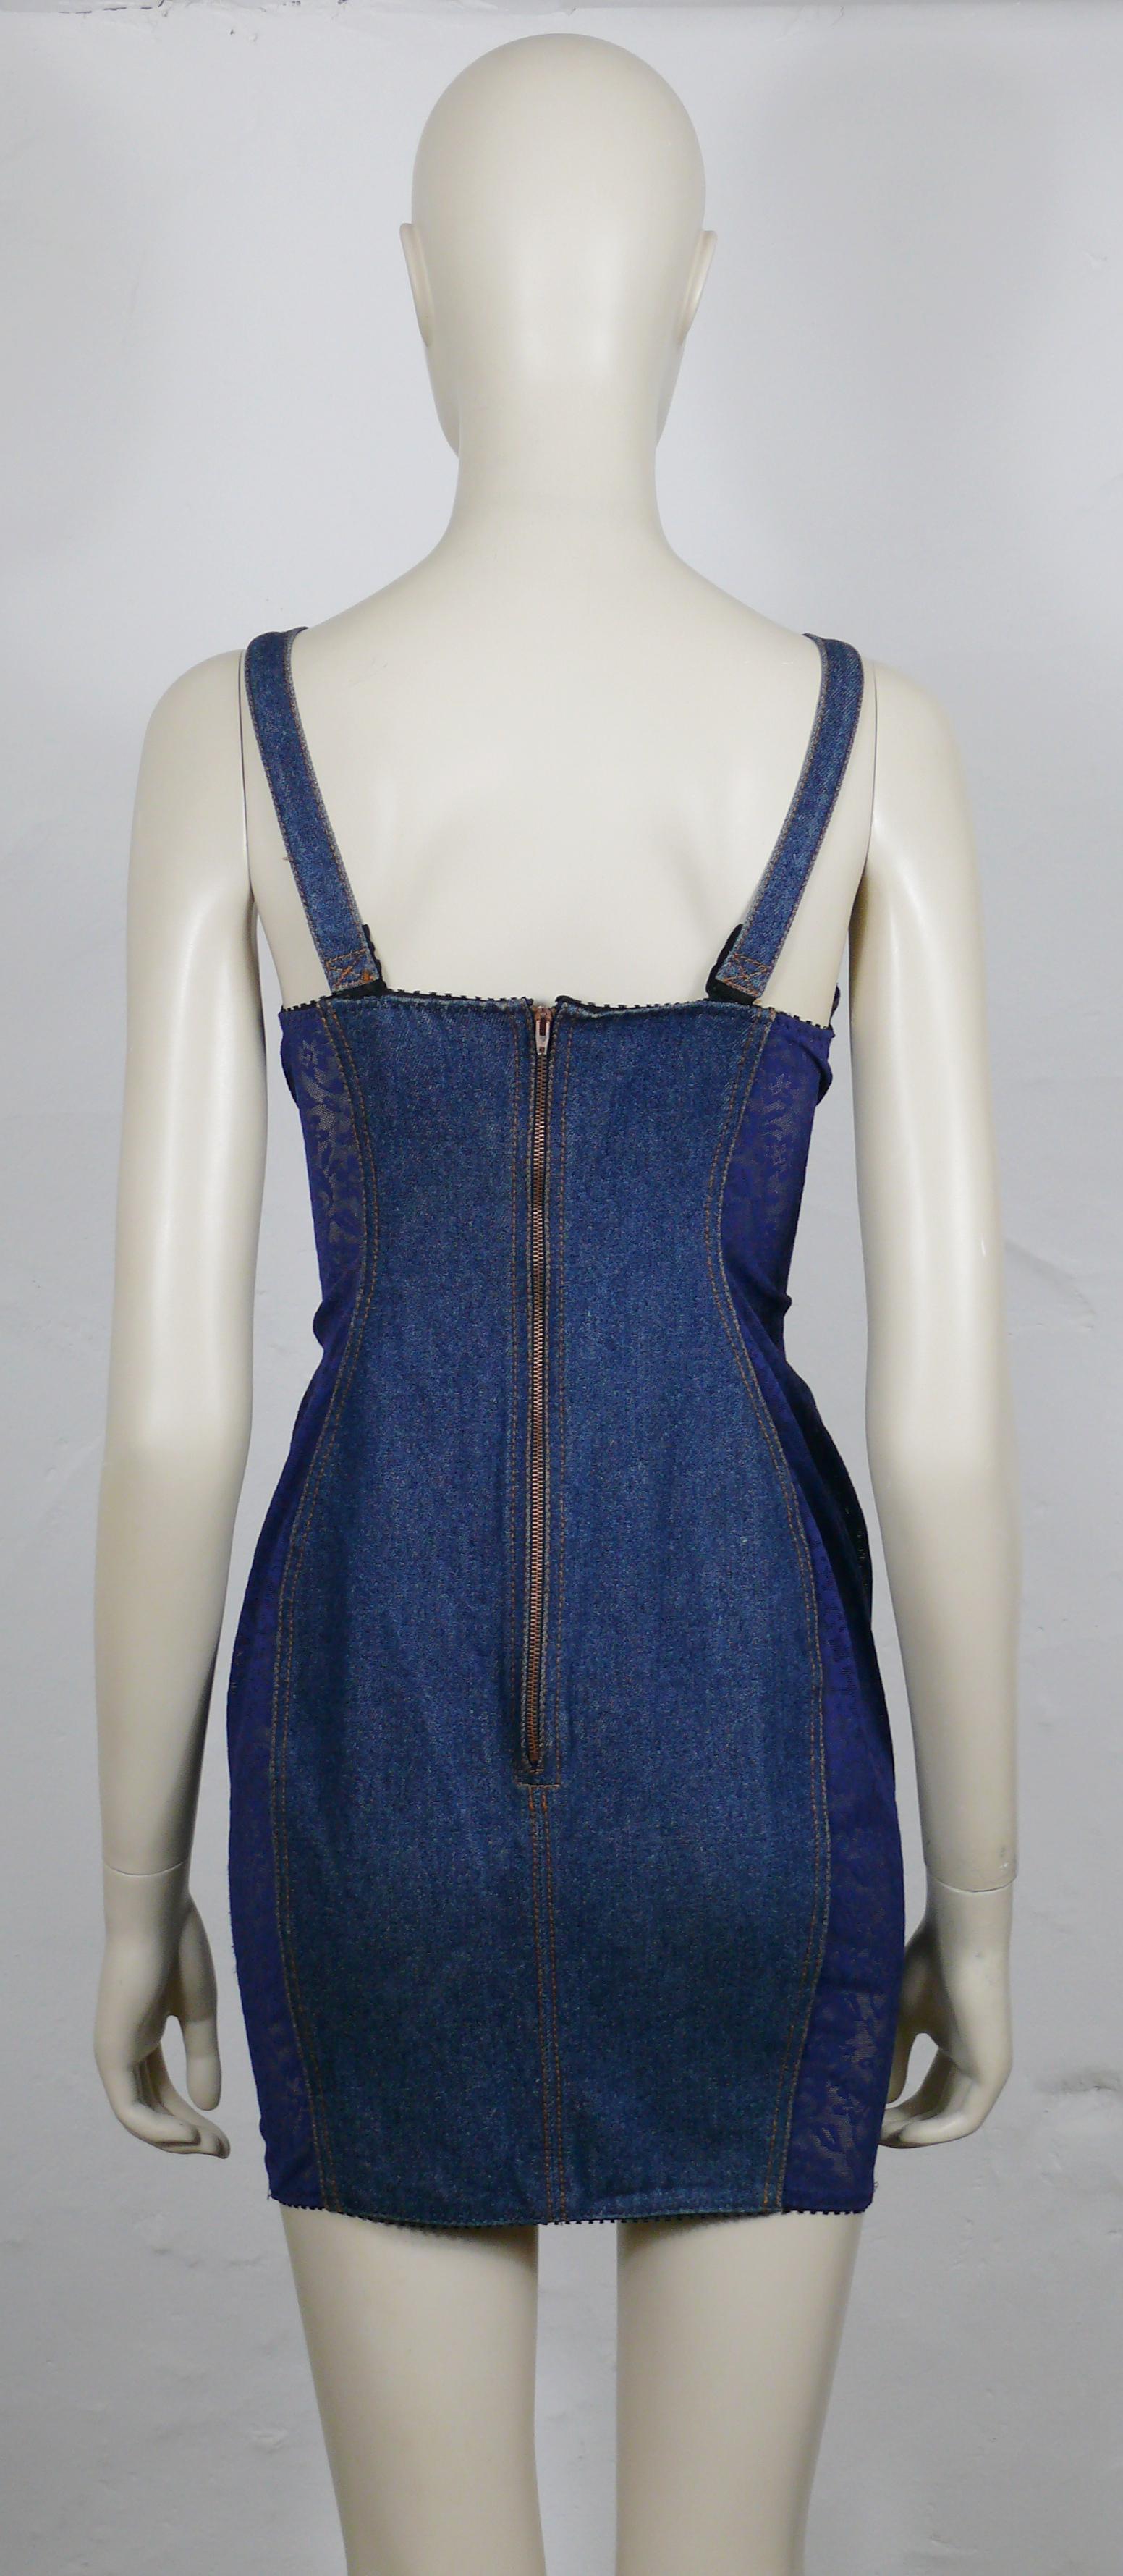 JEAN PAUL GAULTIER JUNIOR Vintage Blue Lace Sheer Panel Bra Mini Denim Dress For Sale 3